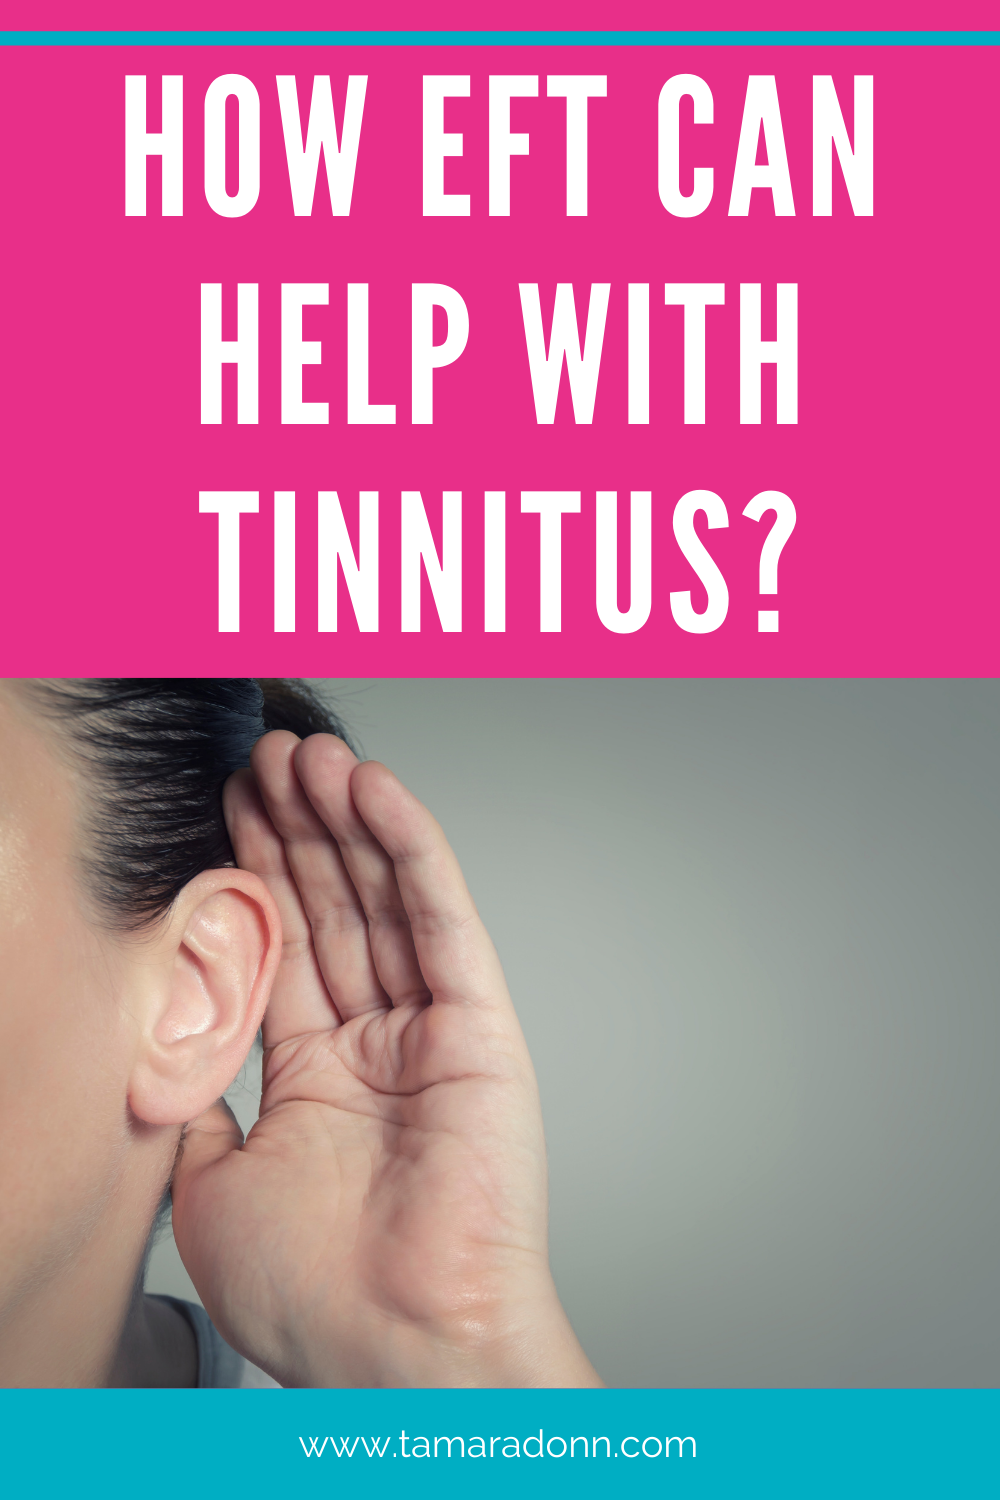 EFT for tinnitus